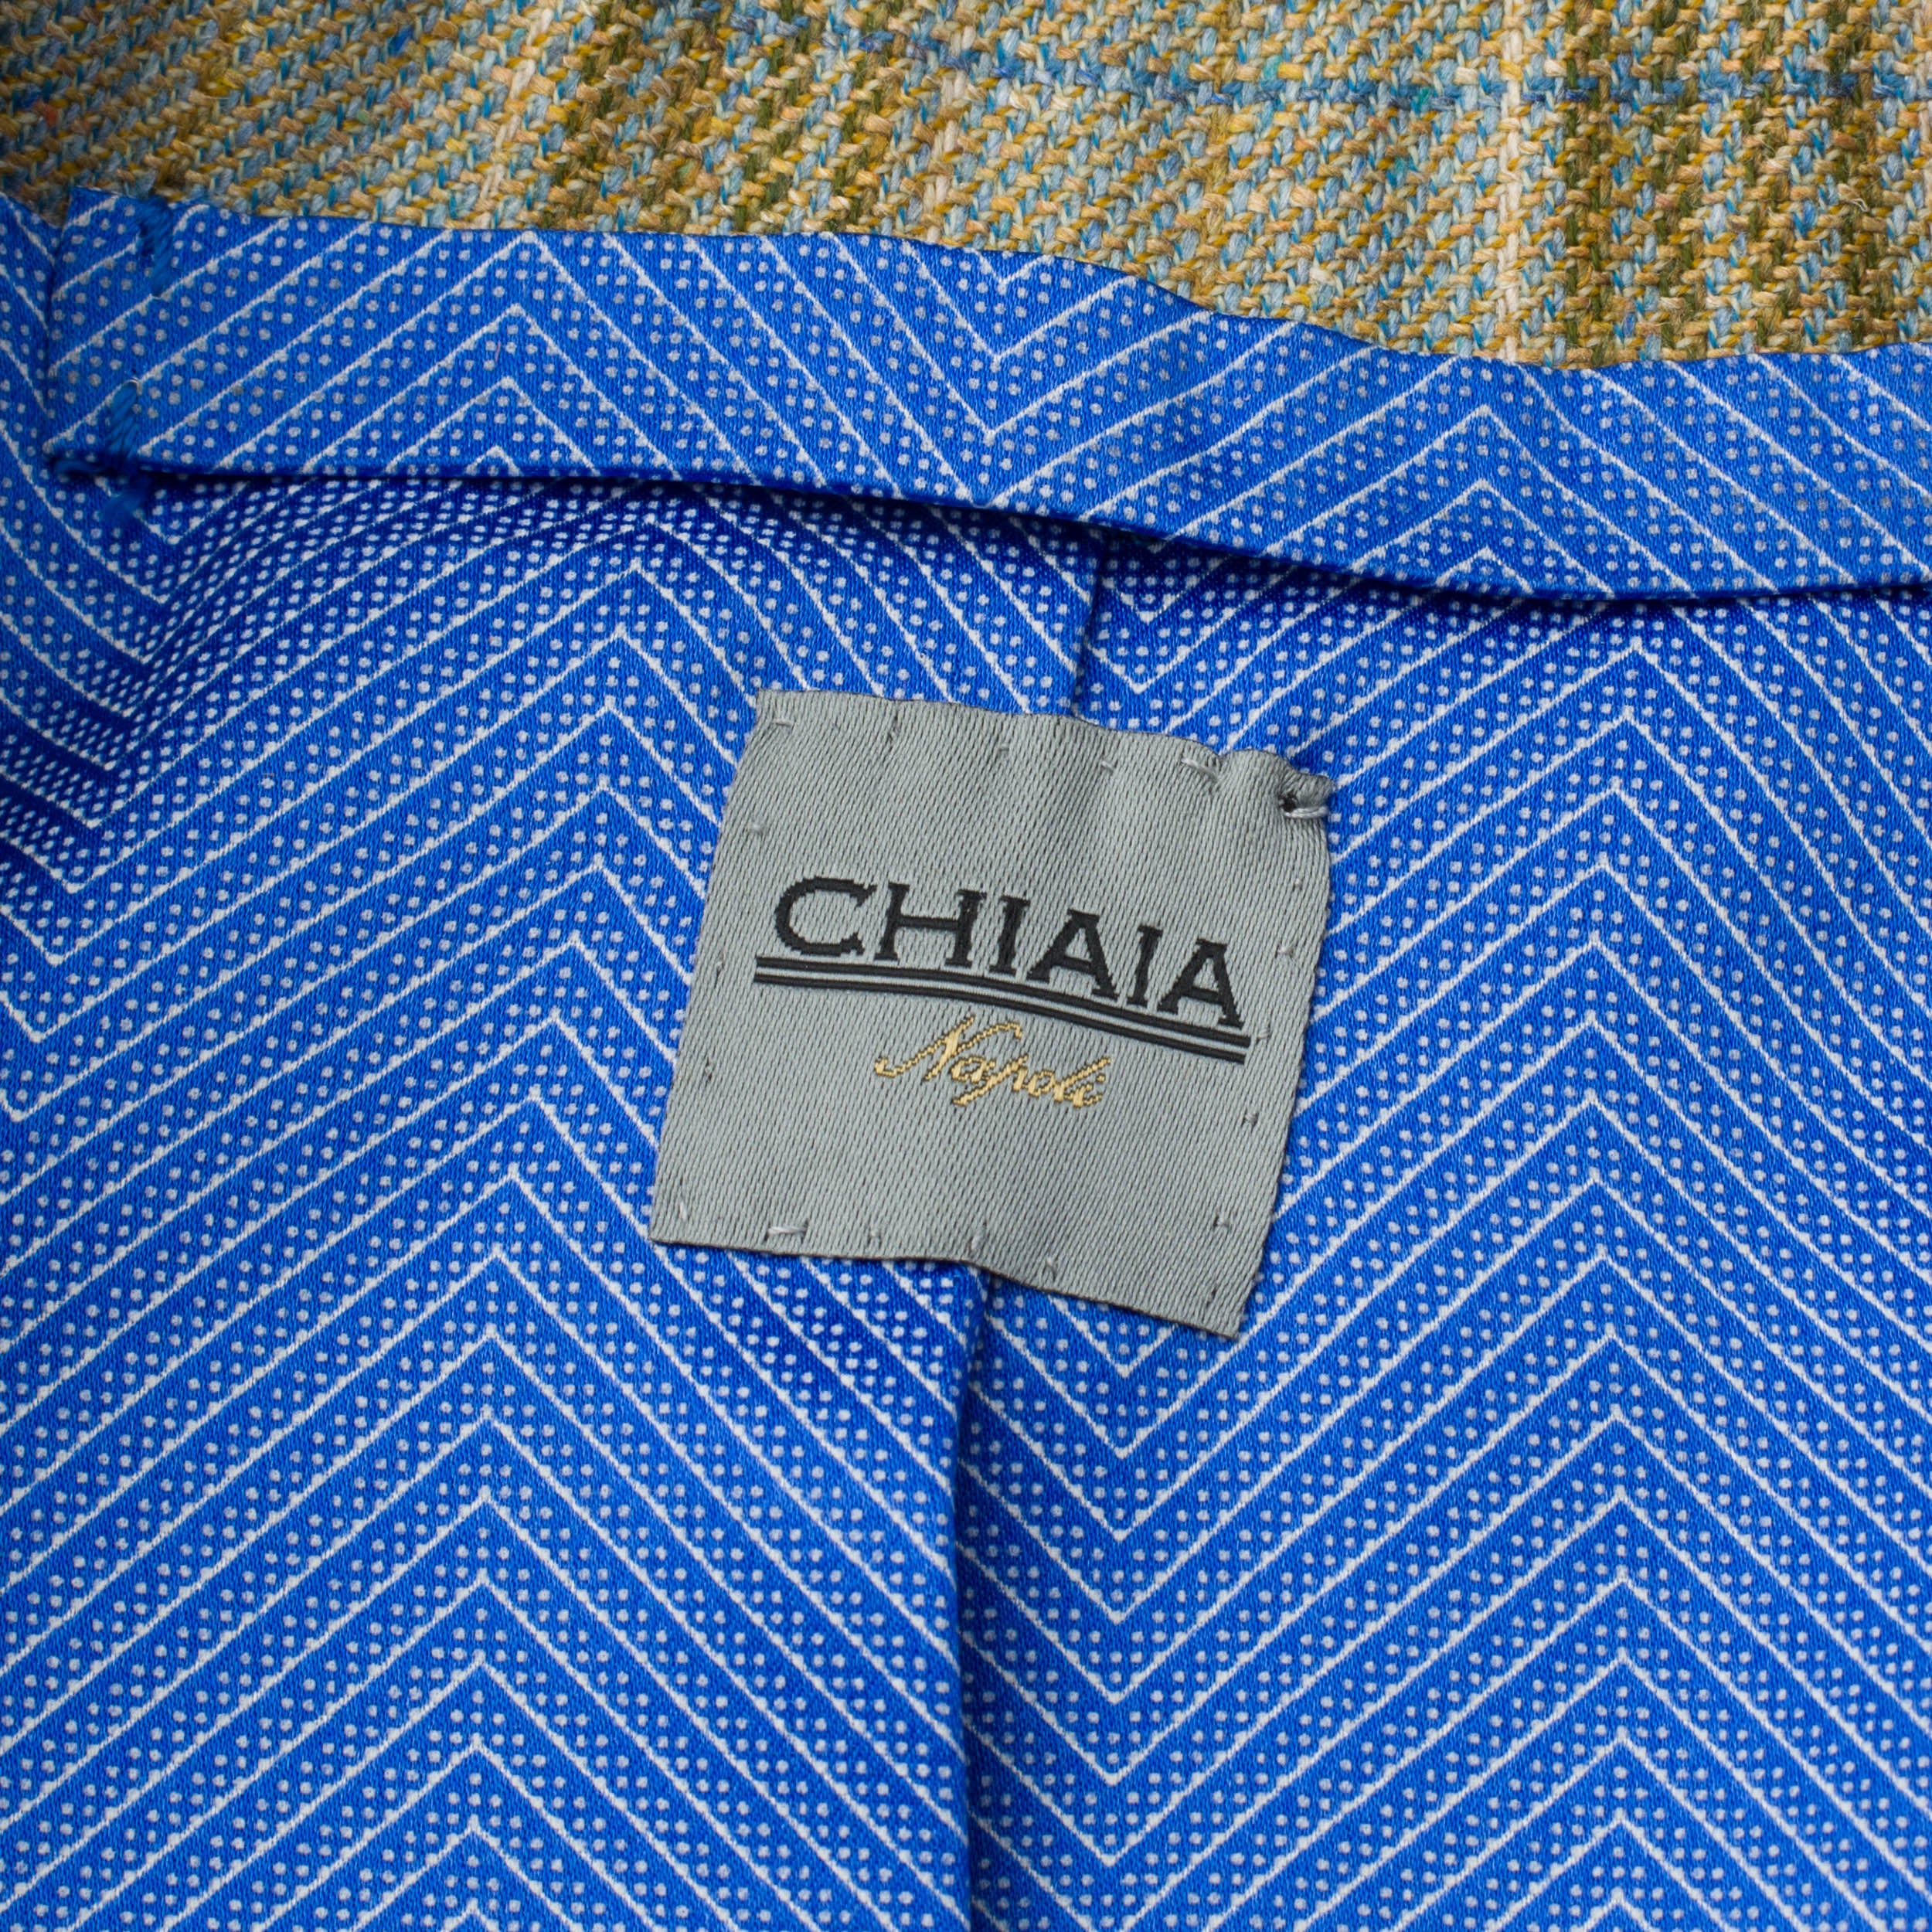 Sartoria CHIAIA Bespoke Handmade Plaid Cashmere Jacket EU 48 NEW US 38 SARTORIA CHIAIA